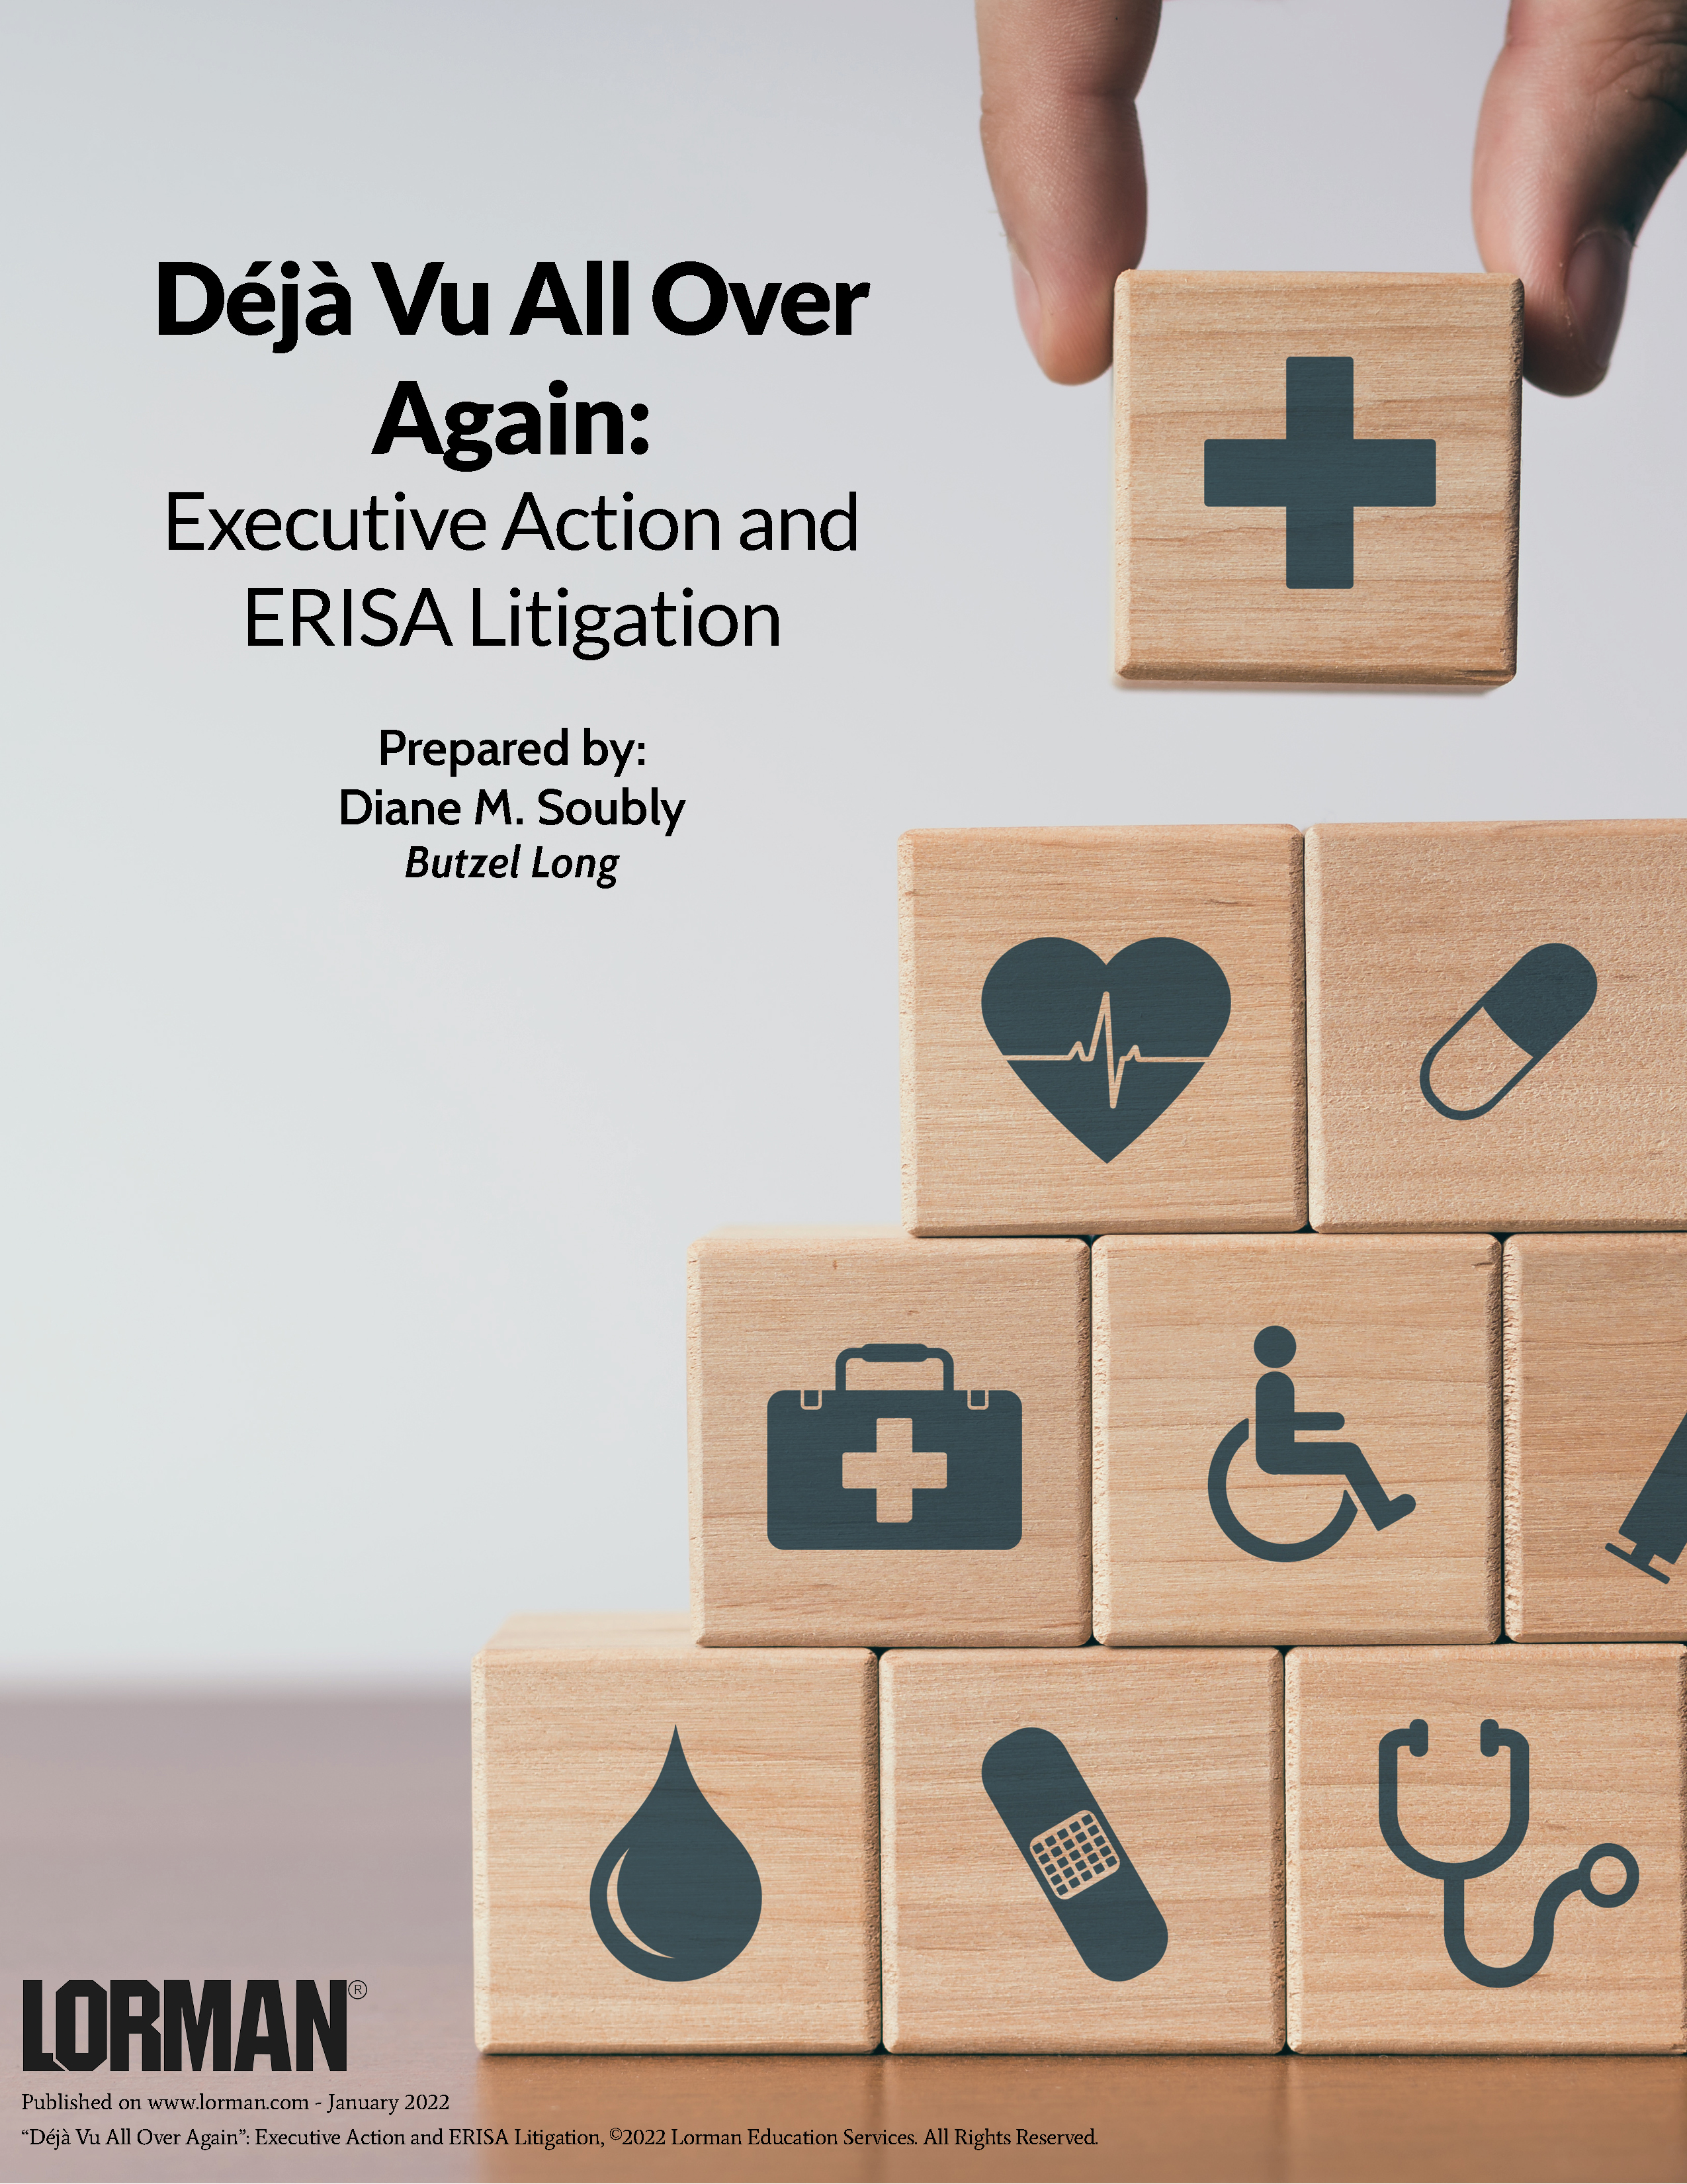 Déjà Vu All Over Again: Executive Action and ERISA Litigation